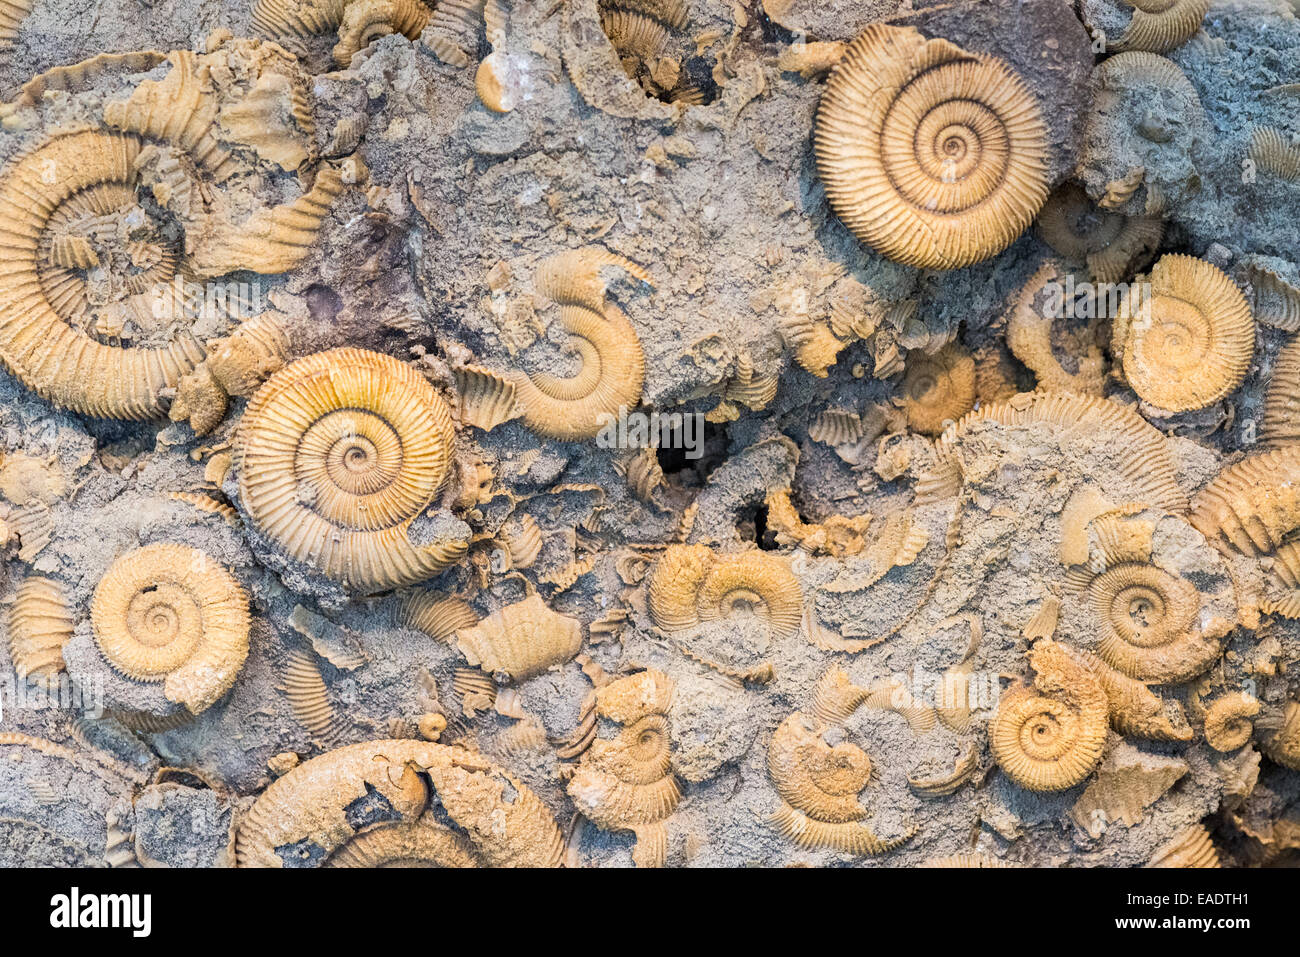 Fossil ammonites in limestone. Stock Photo